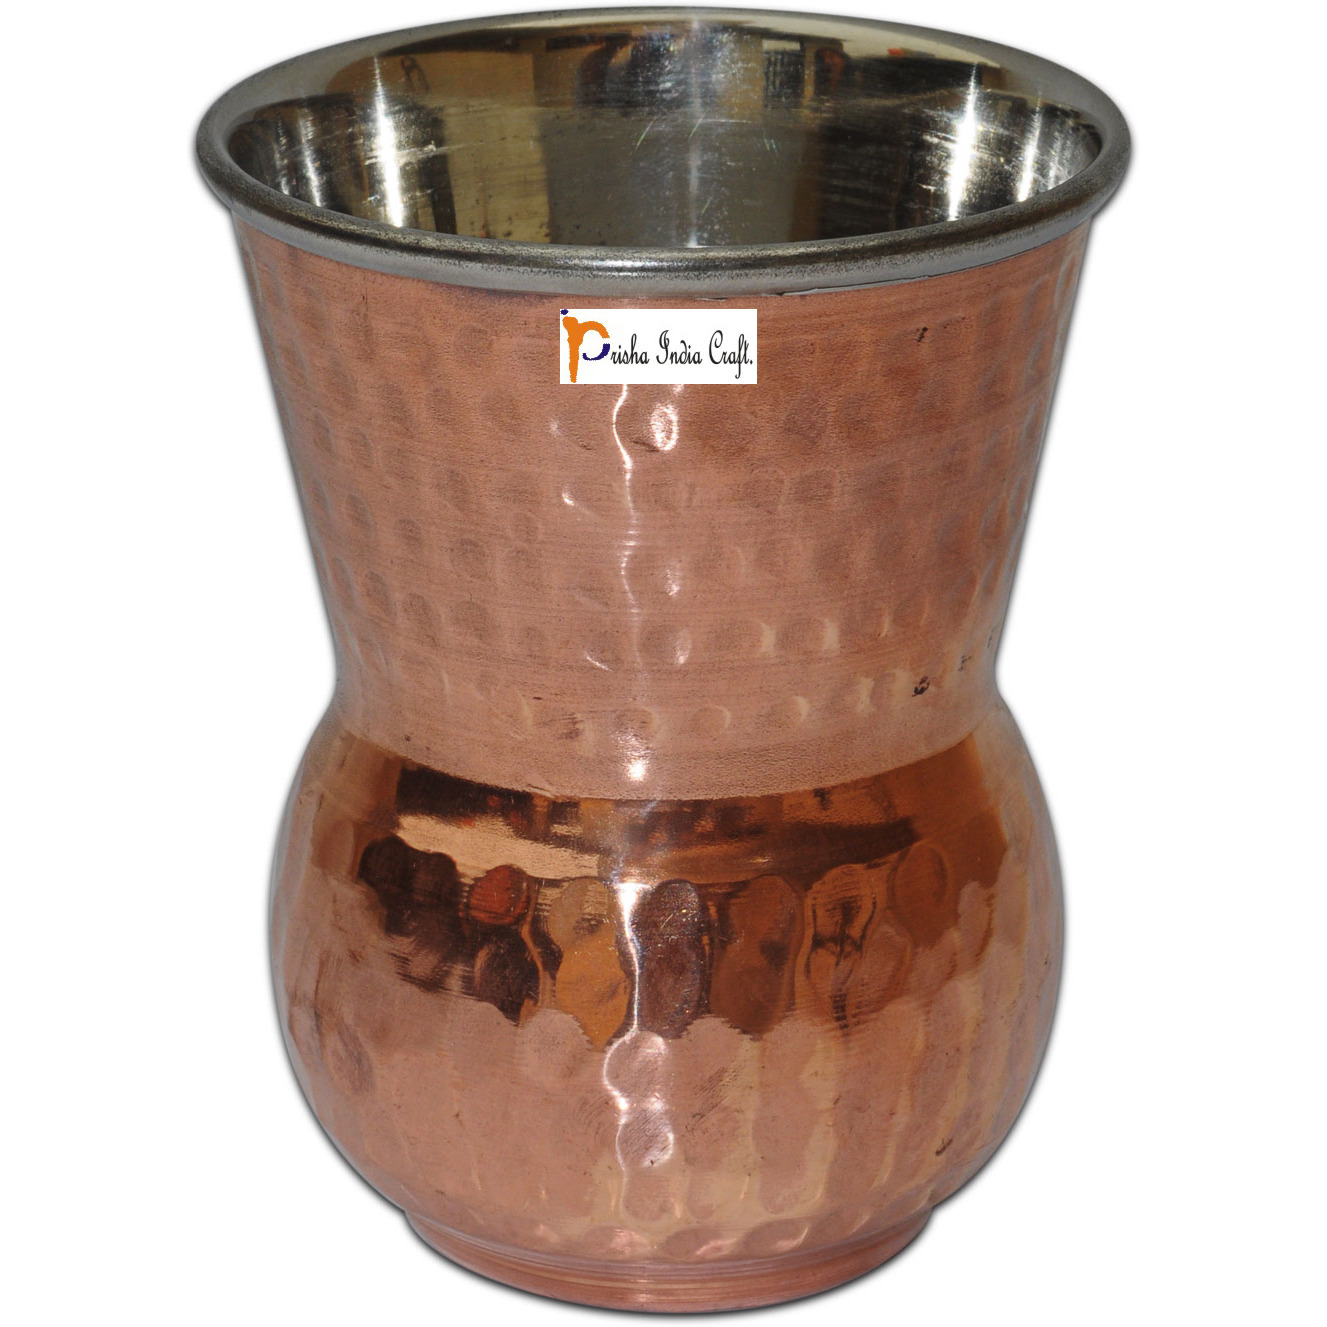 Set of 6 - Prisha India Craft B. Copper Muglai Matka Glass Inside Stainless Steel Hammered Style Drinkware Tumbler Handmade Copper Cups - Traveller's Copper Mug